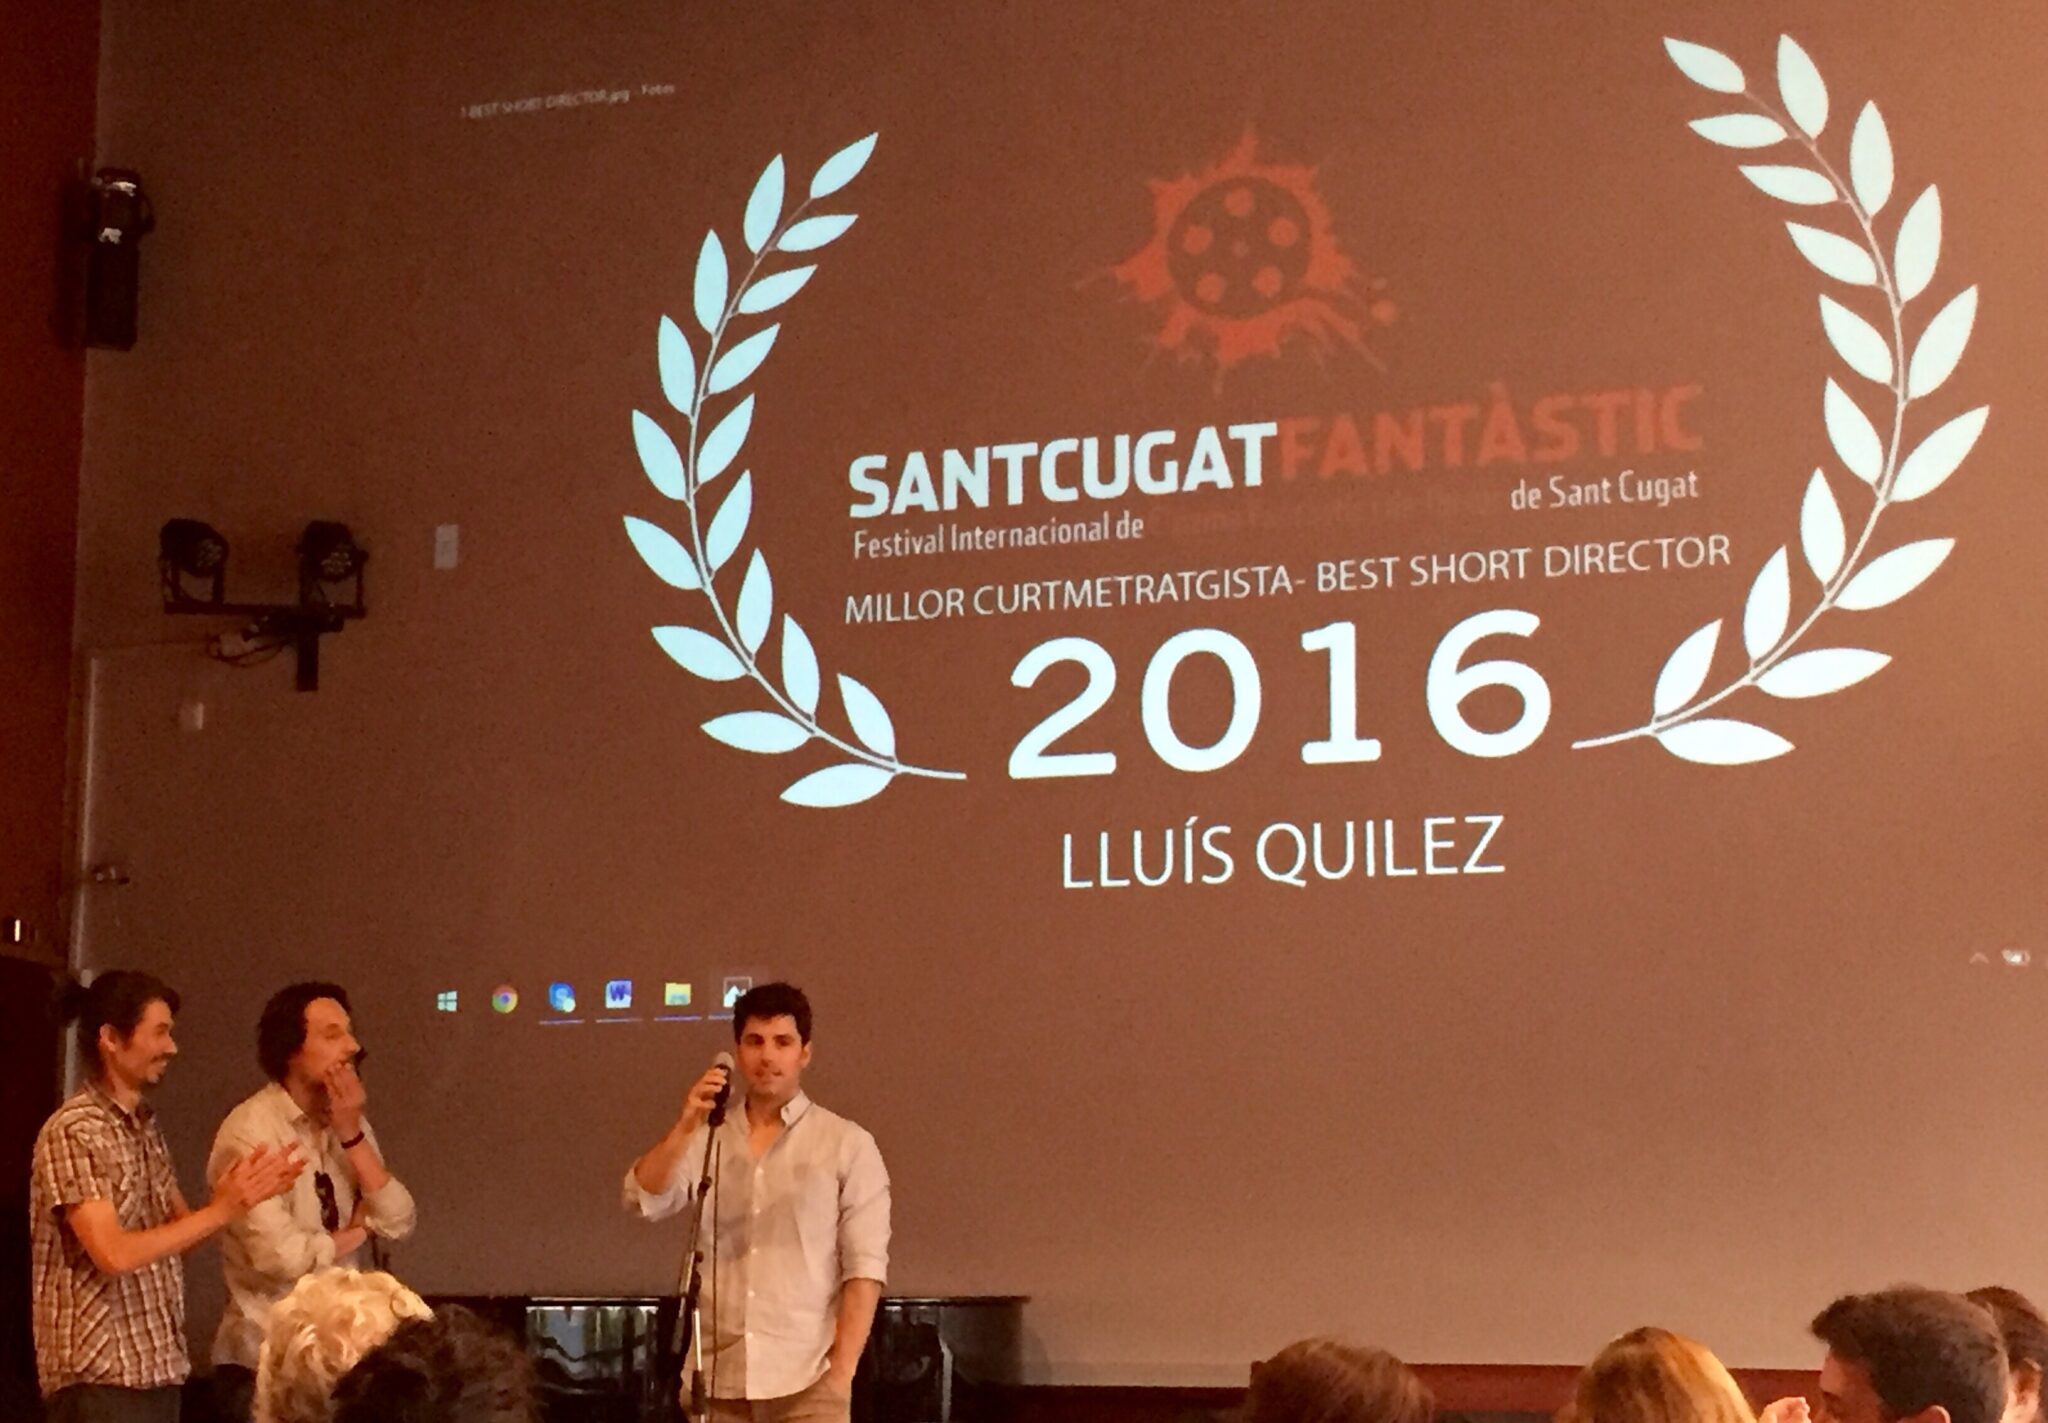 Sant Cugat Fantàstic 2016, ganadores - findelahistoria.com